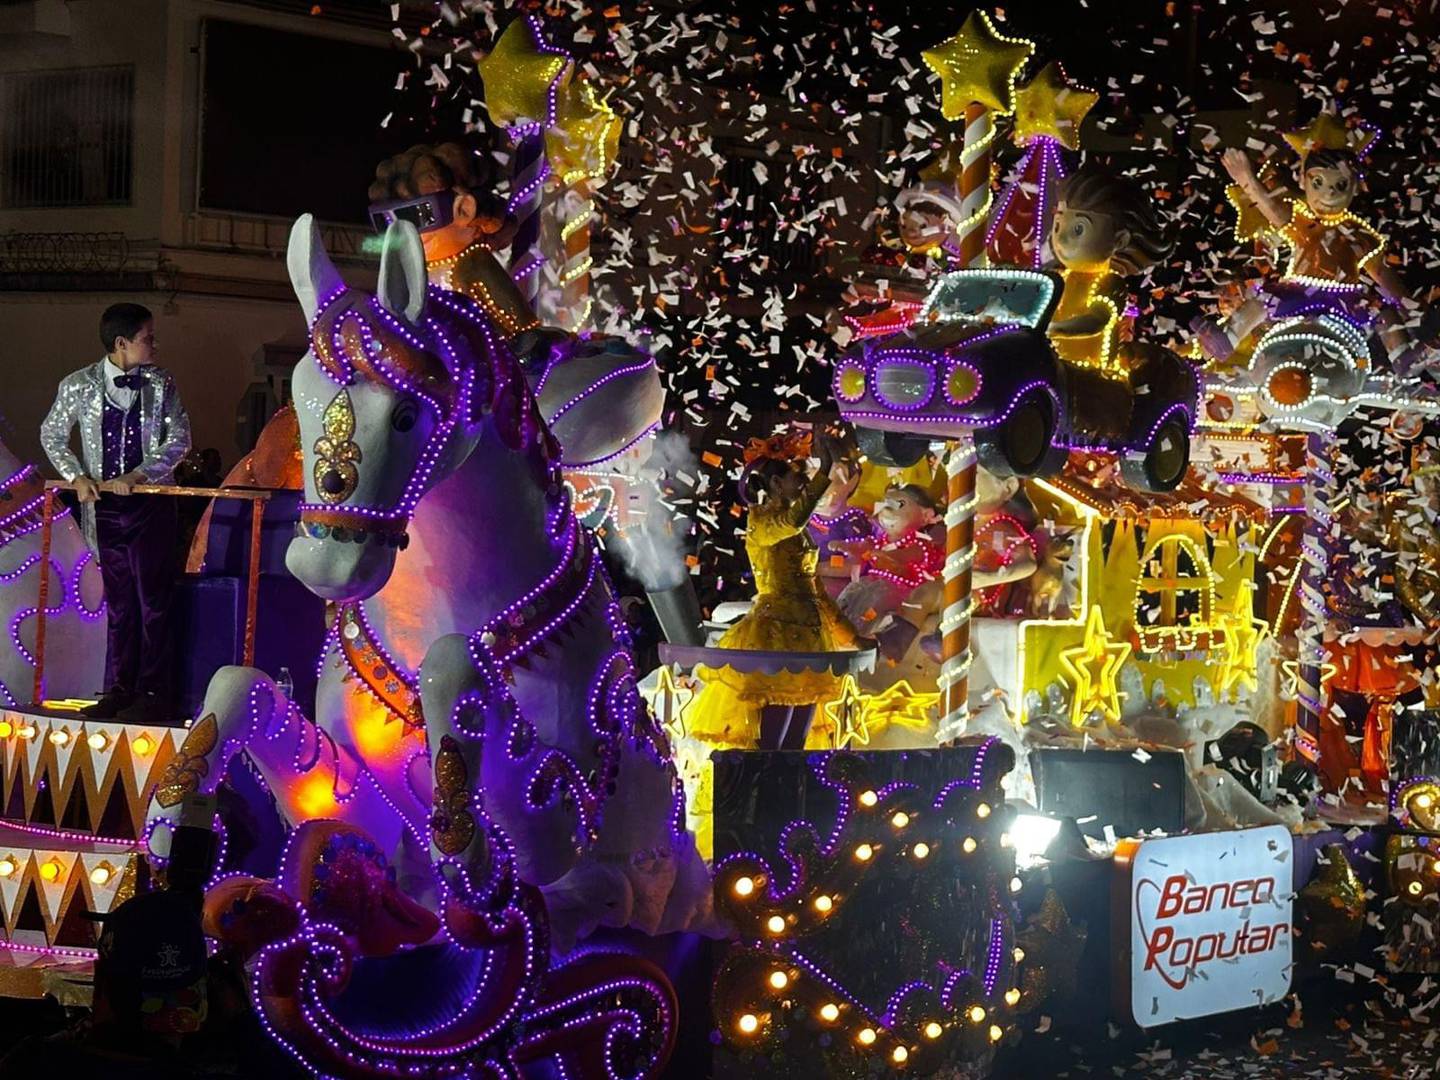 Carroza Banco Popular Festival de la Luz